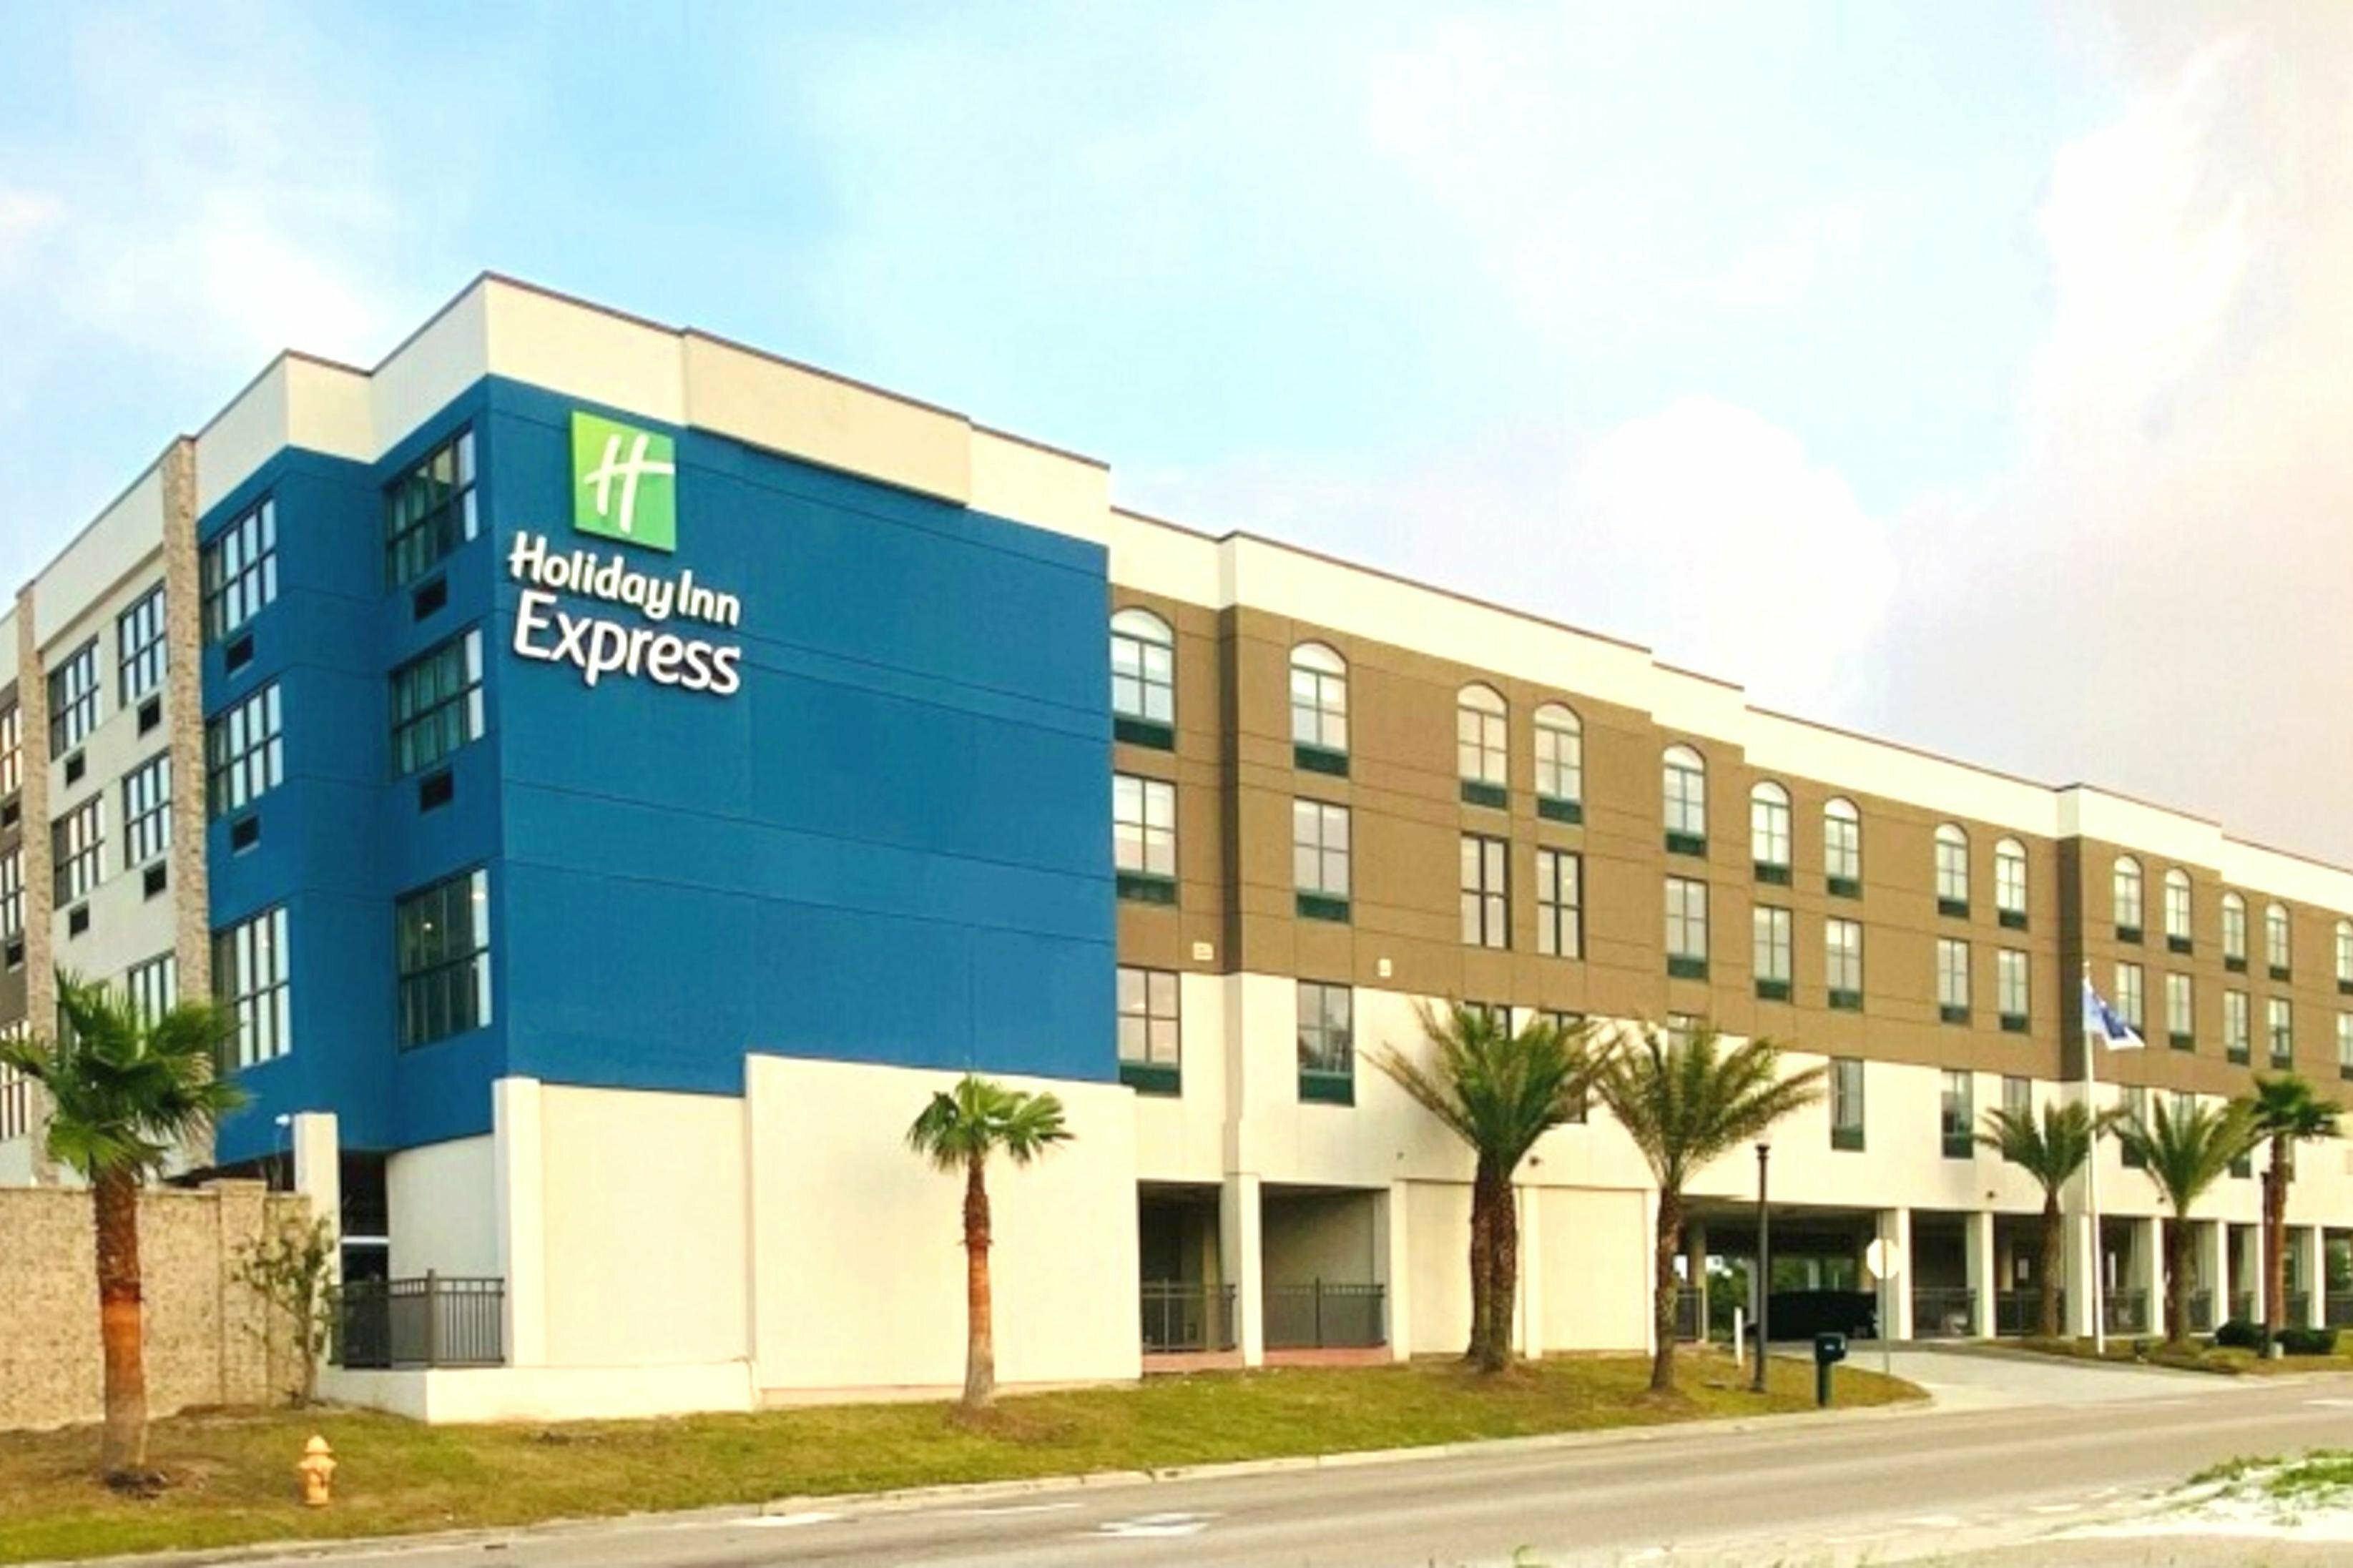 Photo of Holiday Inn Express Gulfport Beach, Gulfport, MS